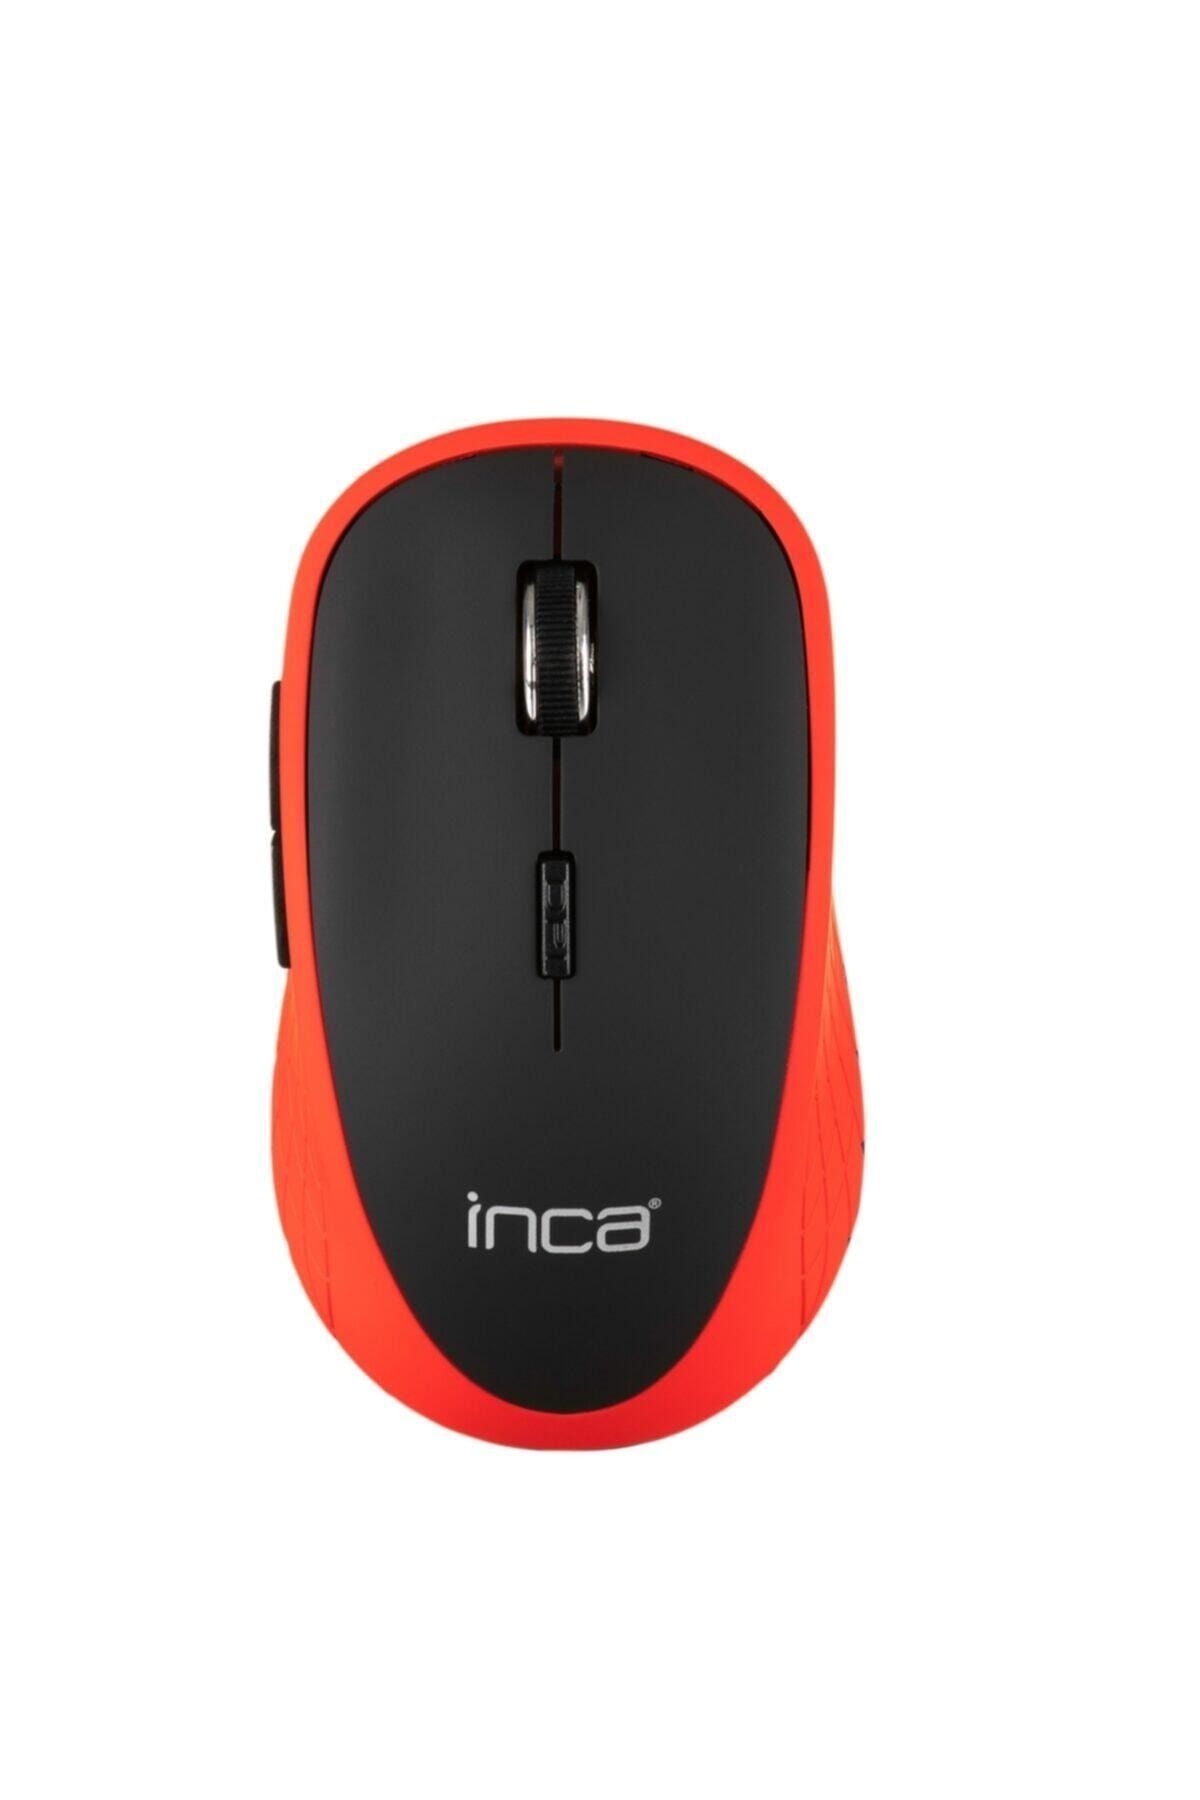 Inca Iwm-391t Kablosuz Rubber 1600dpi Optic Siyah/kırmızı Mouse